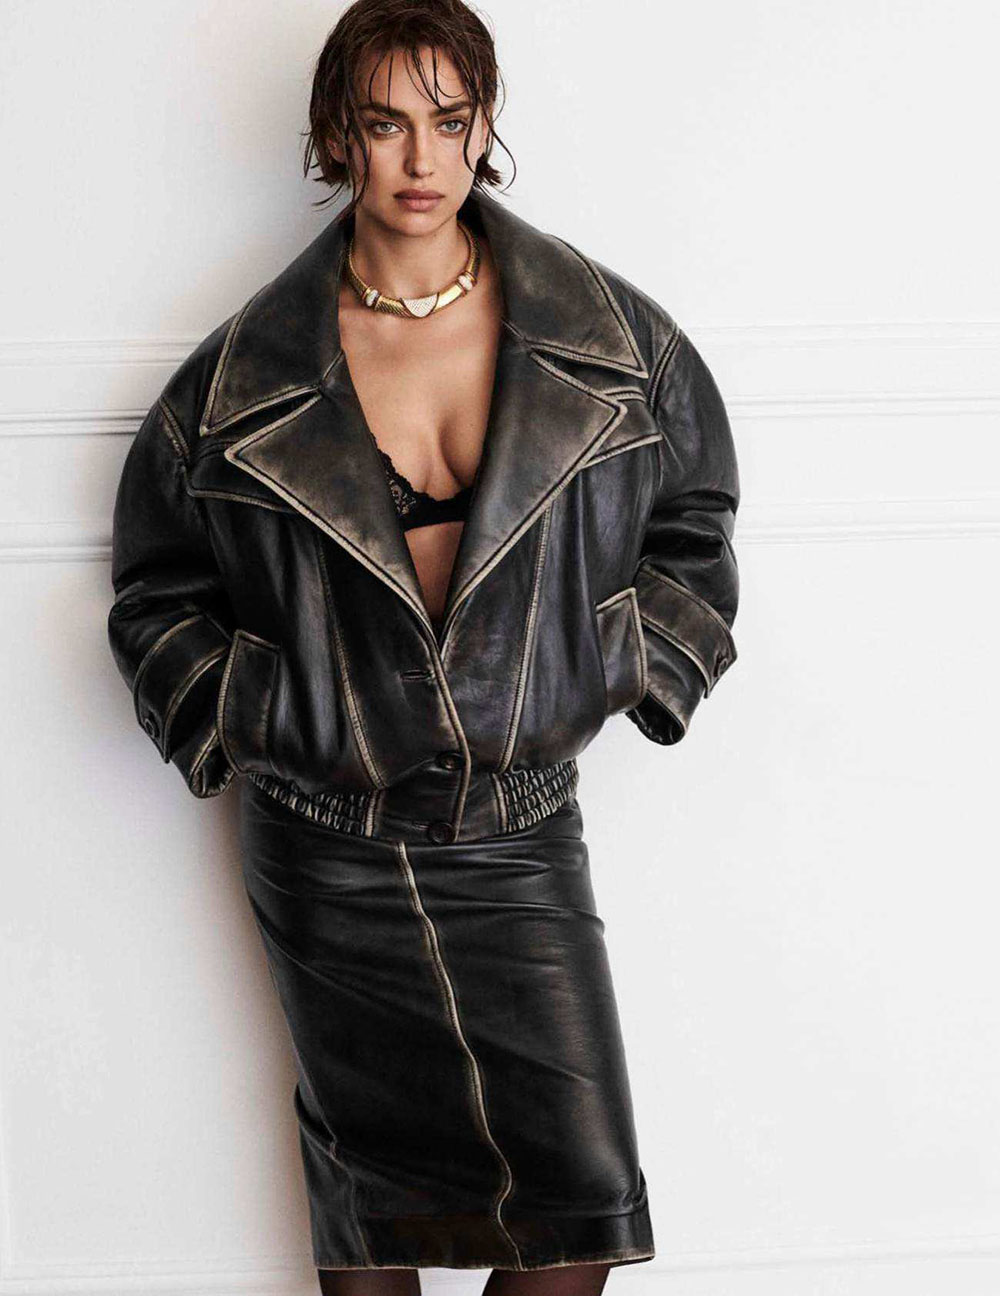 Irina Shayk covers Vogue Spain September 2018 by Giampaolo Sgura